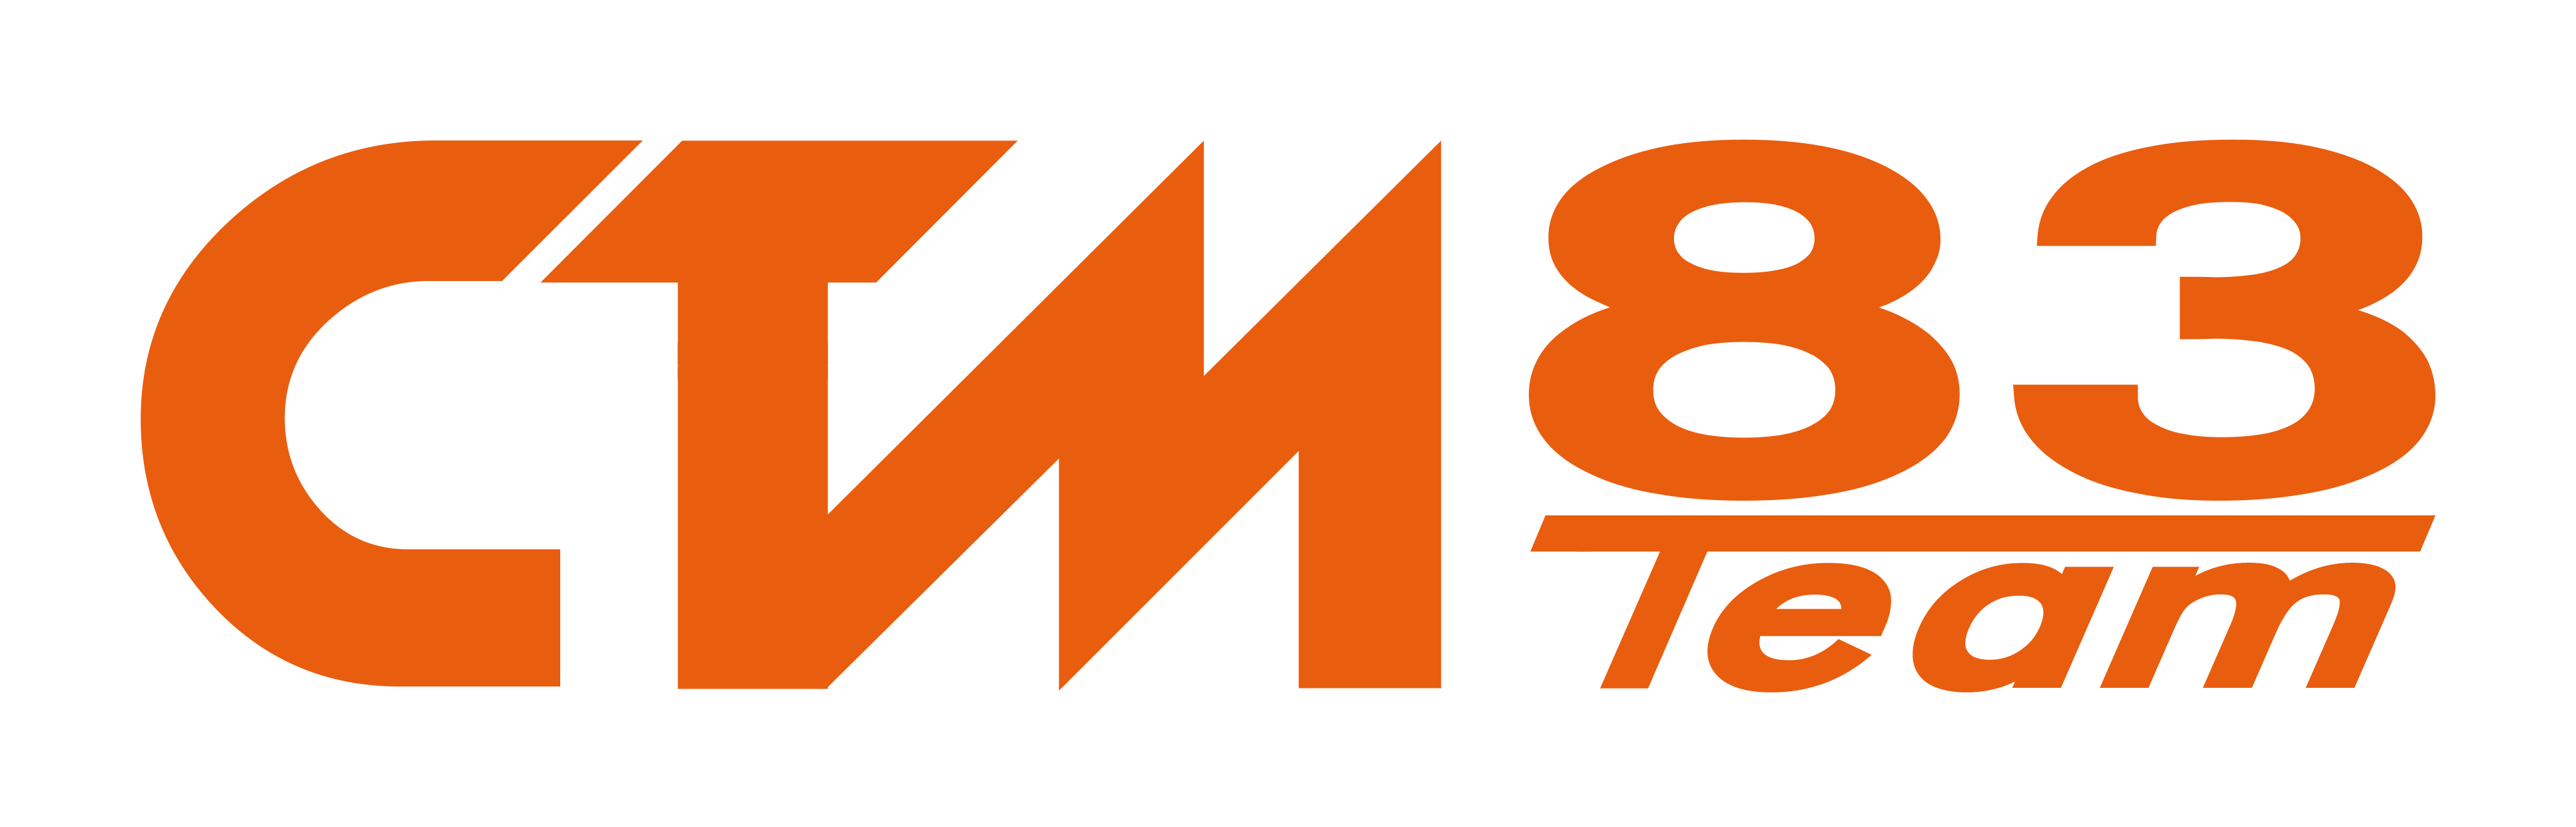 Logos Team CTM83 OFT